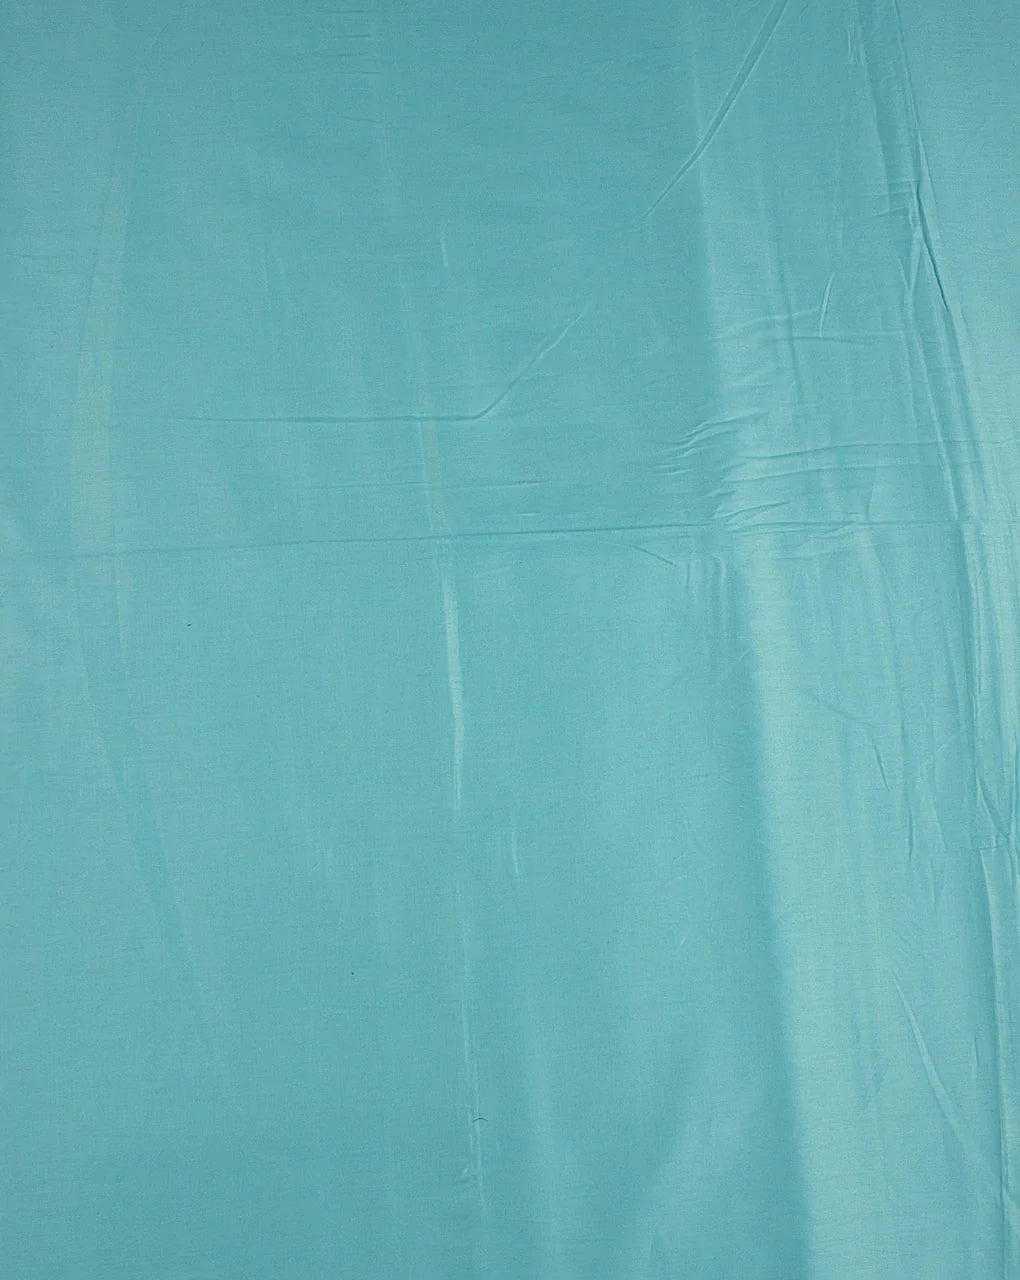 Turquoise Plain Glazed Cotton Fabric - Fabriclore.com